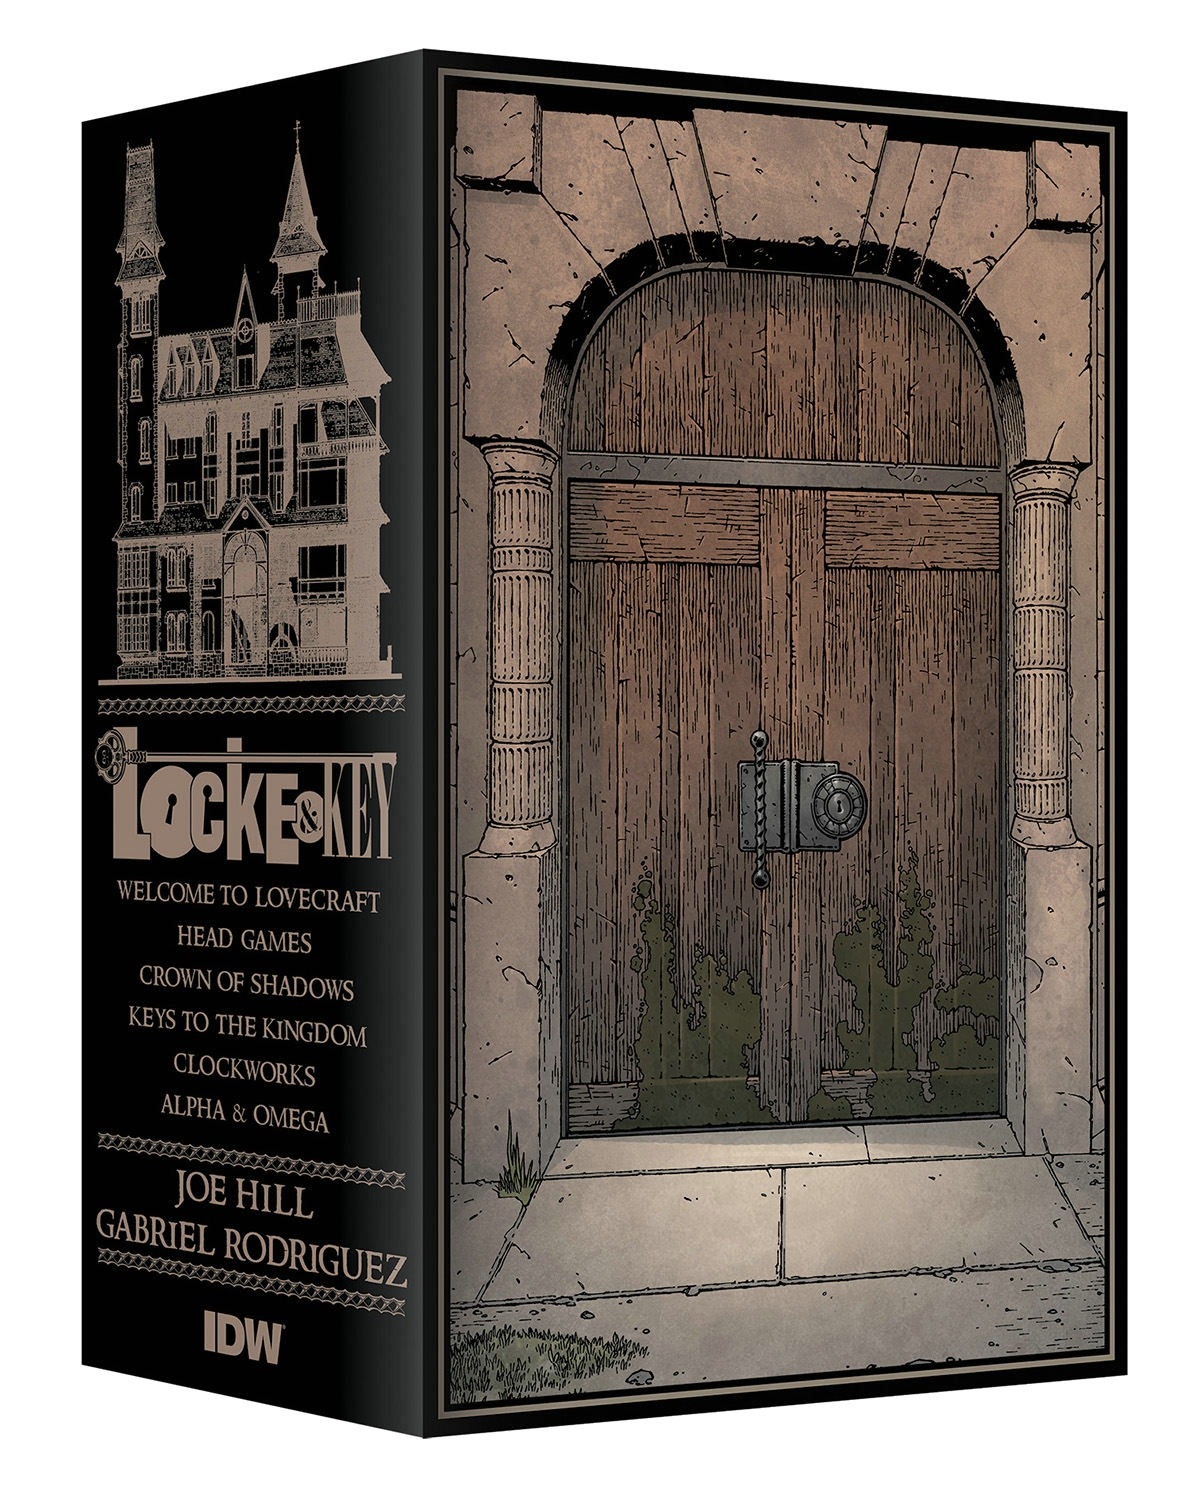 Locke & Key: Keyhouse Compendium by Joe Hill - Penguin Books Australia